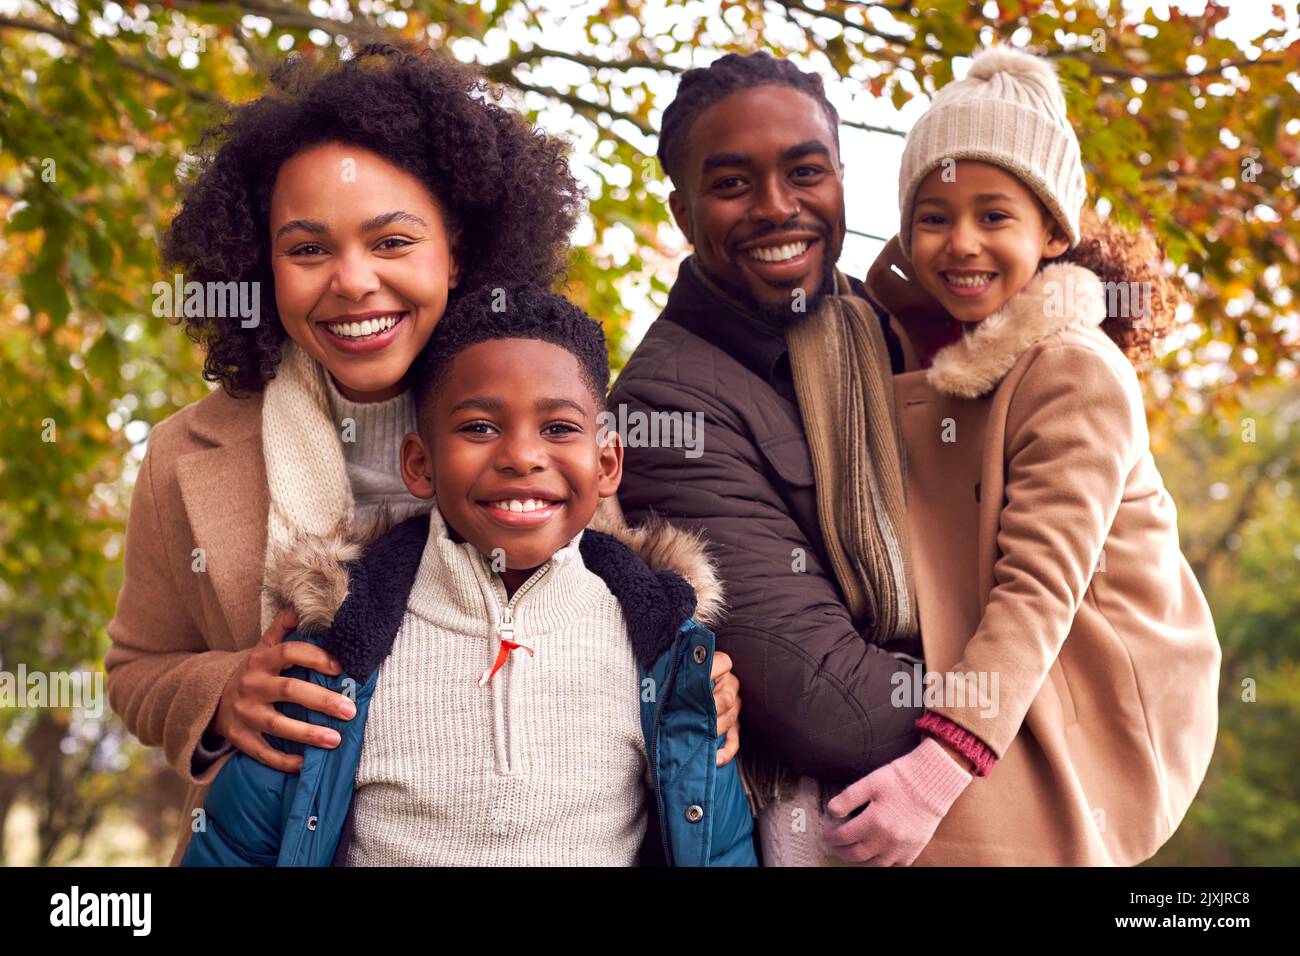 Portrait Of Smiling Family On Walk Through Countryside Against Autumn Trees Stock Photo